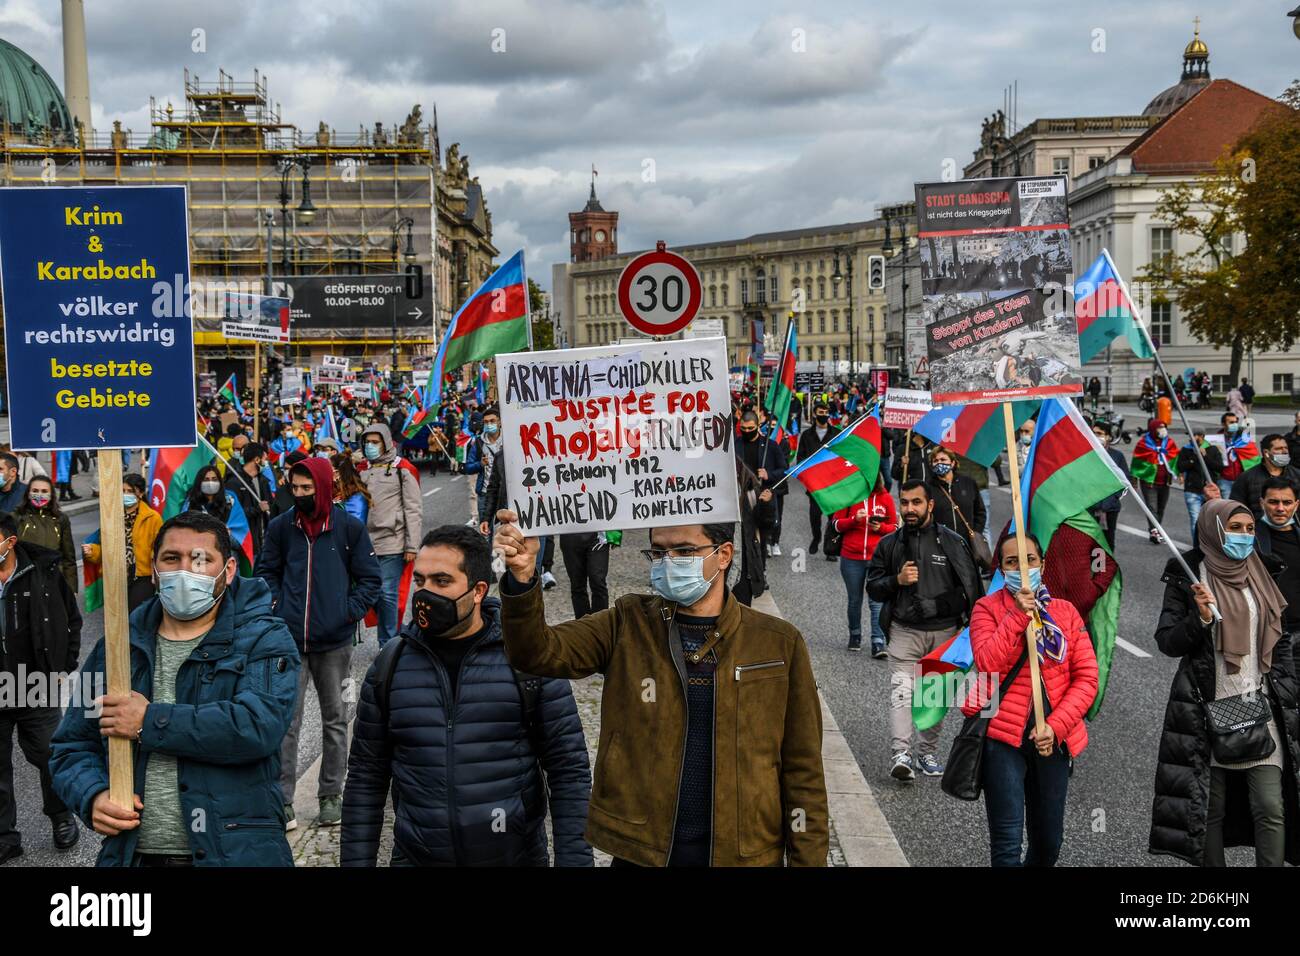 Azerbaijani community protests in Berlin - Aserbaidschaner demonstrieren in Berlin Stock Photo